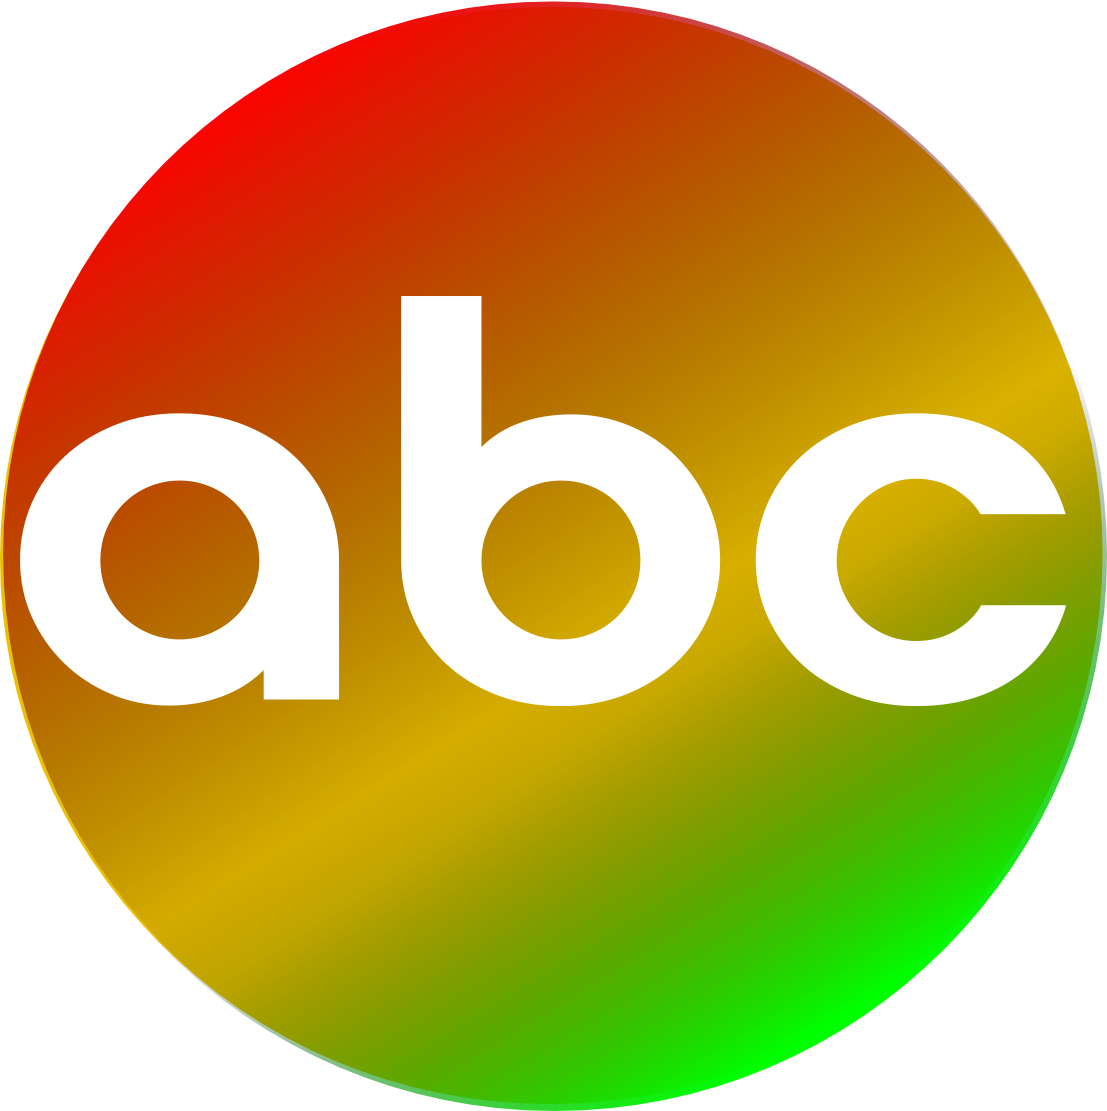 abc logo 1962 by Paul Rand